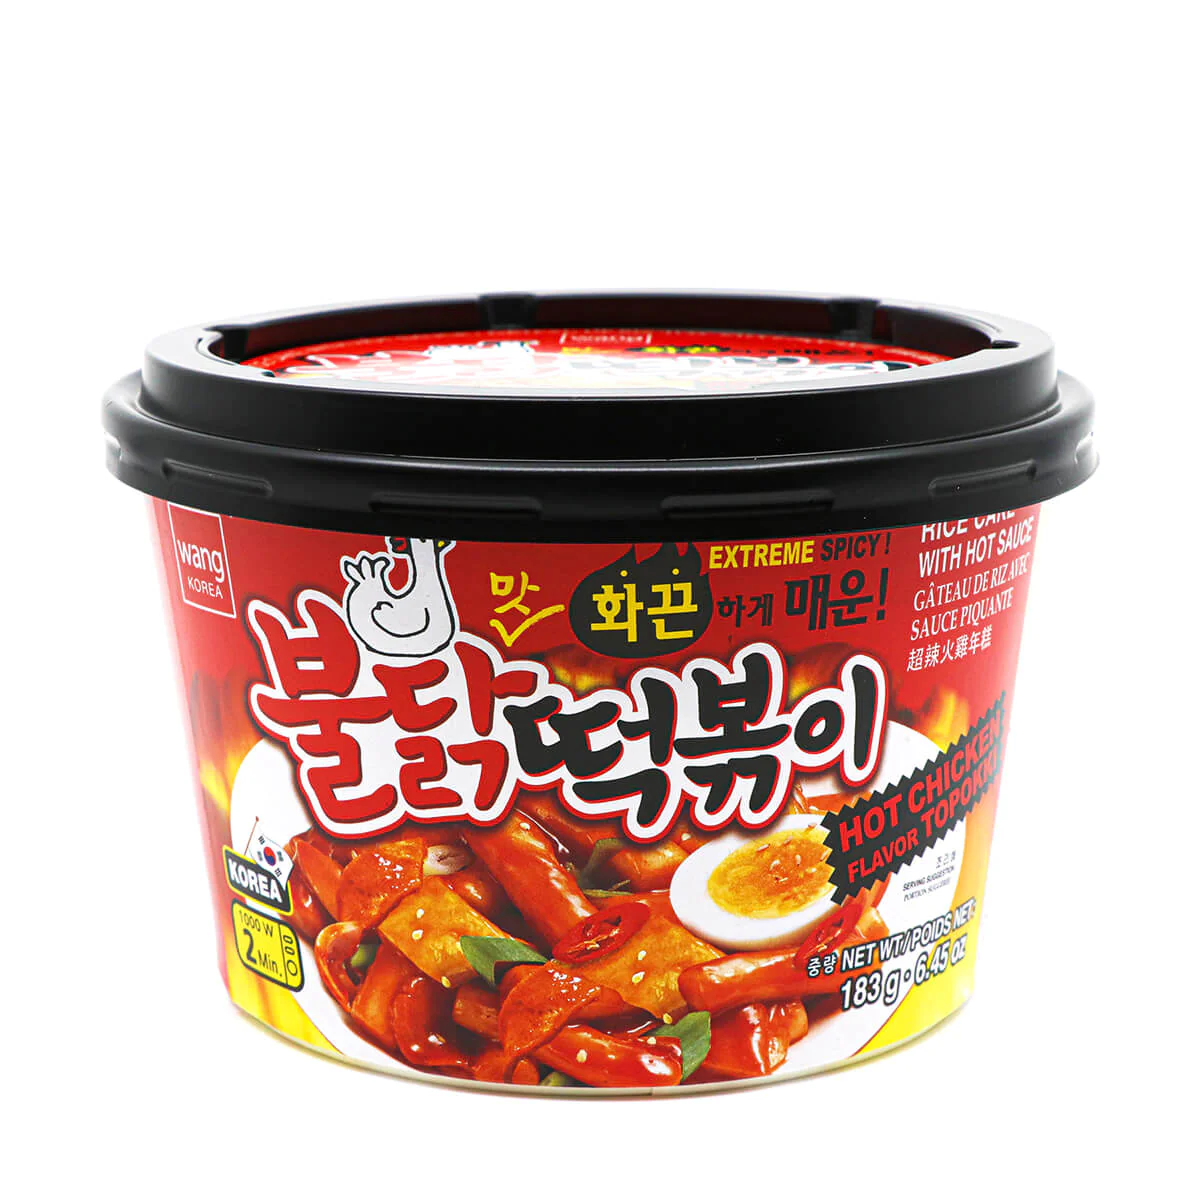 Wang Korea Rice Cake with Hot Sauce Hot Chicken Flavor Topokki 183g